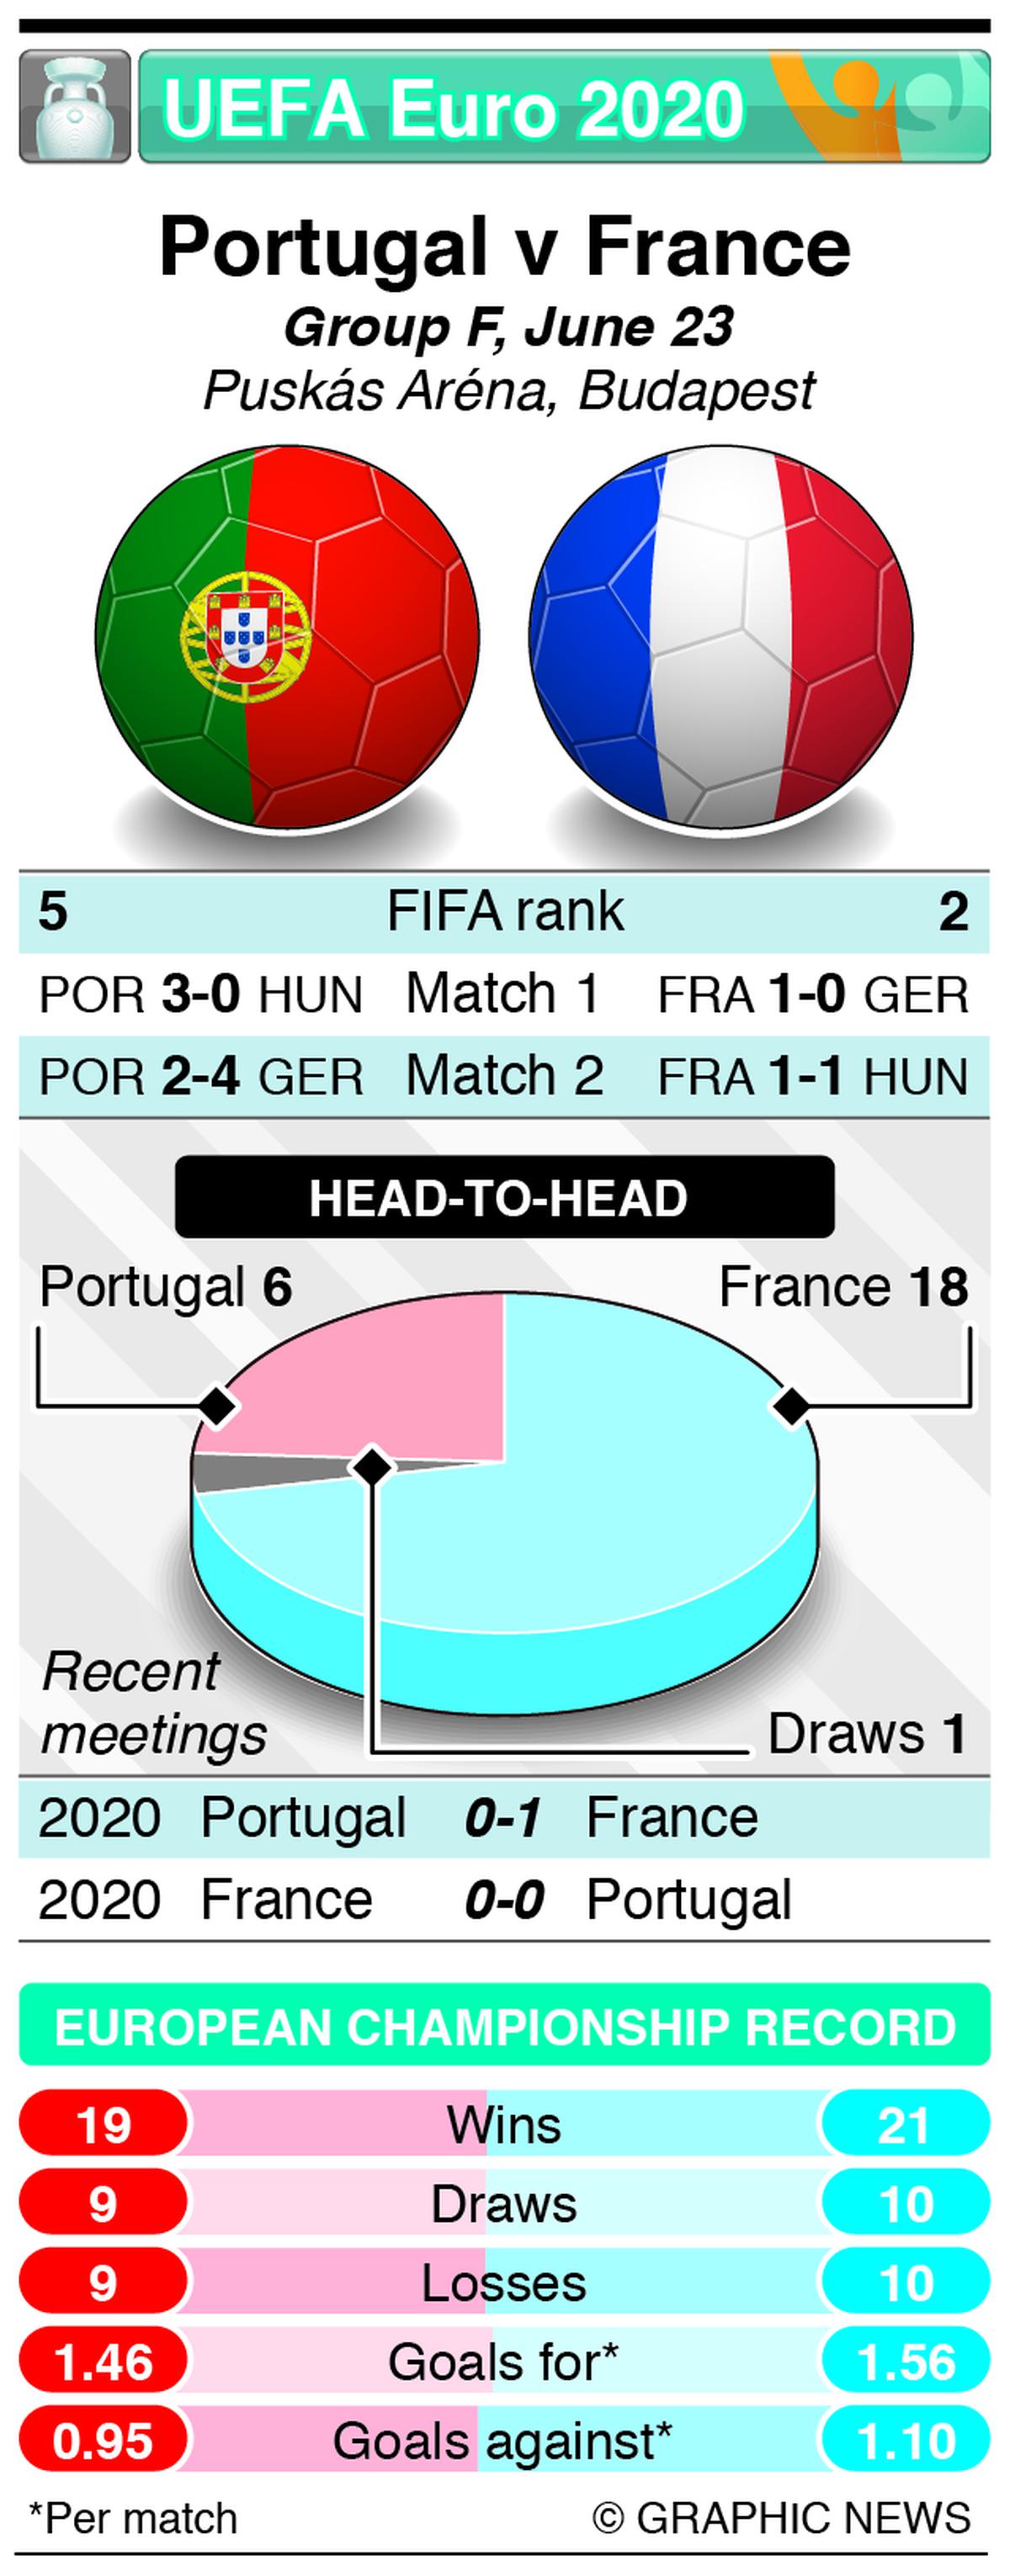 Portugal vs france head to head